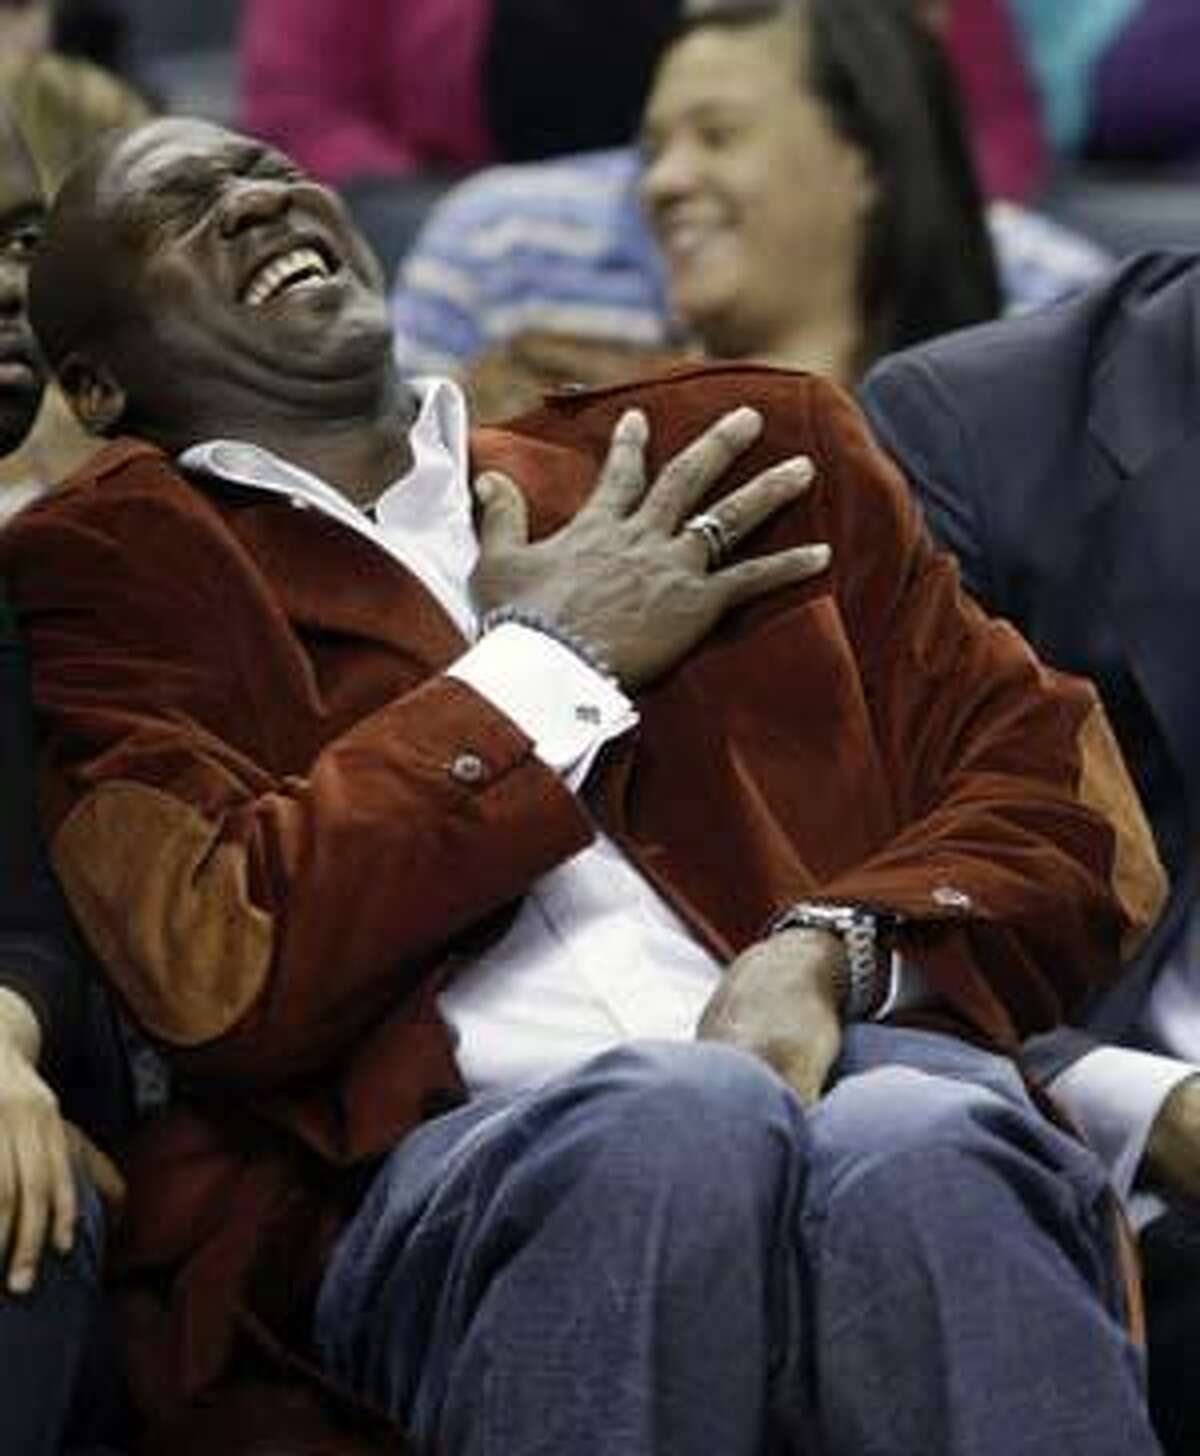 Michael Jordan reaches deal to buy Bobcats